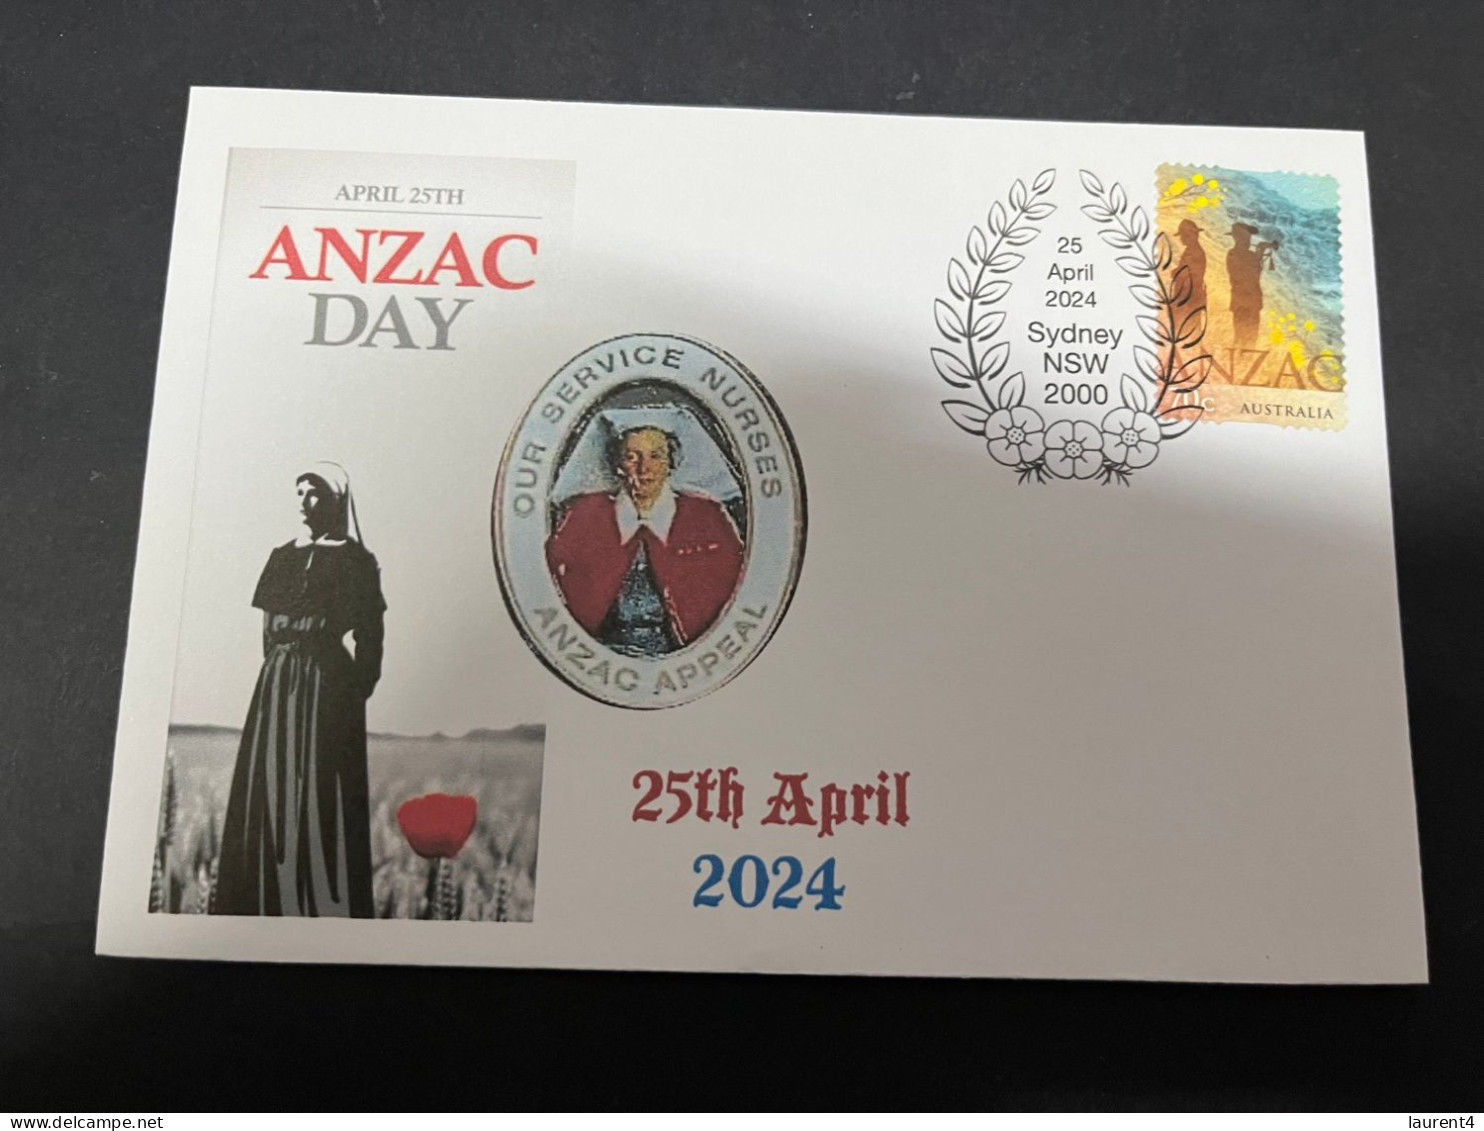 24-4-2024 (2 Z 52) Australia ANZAC 2024 - Special Cover Postmarked 25 April 2024 (Red Cross Nurse) - Militares